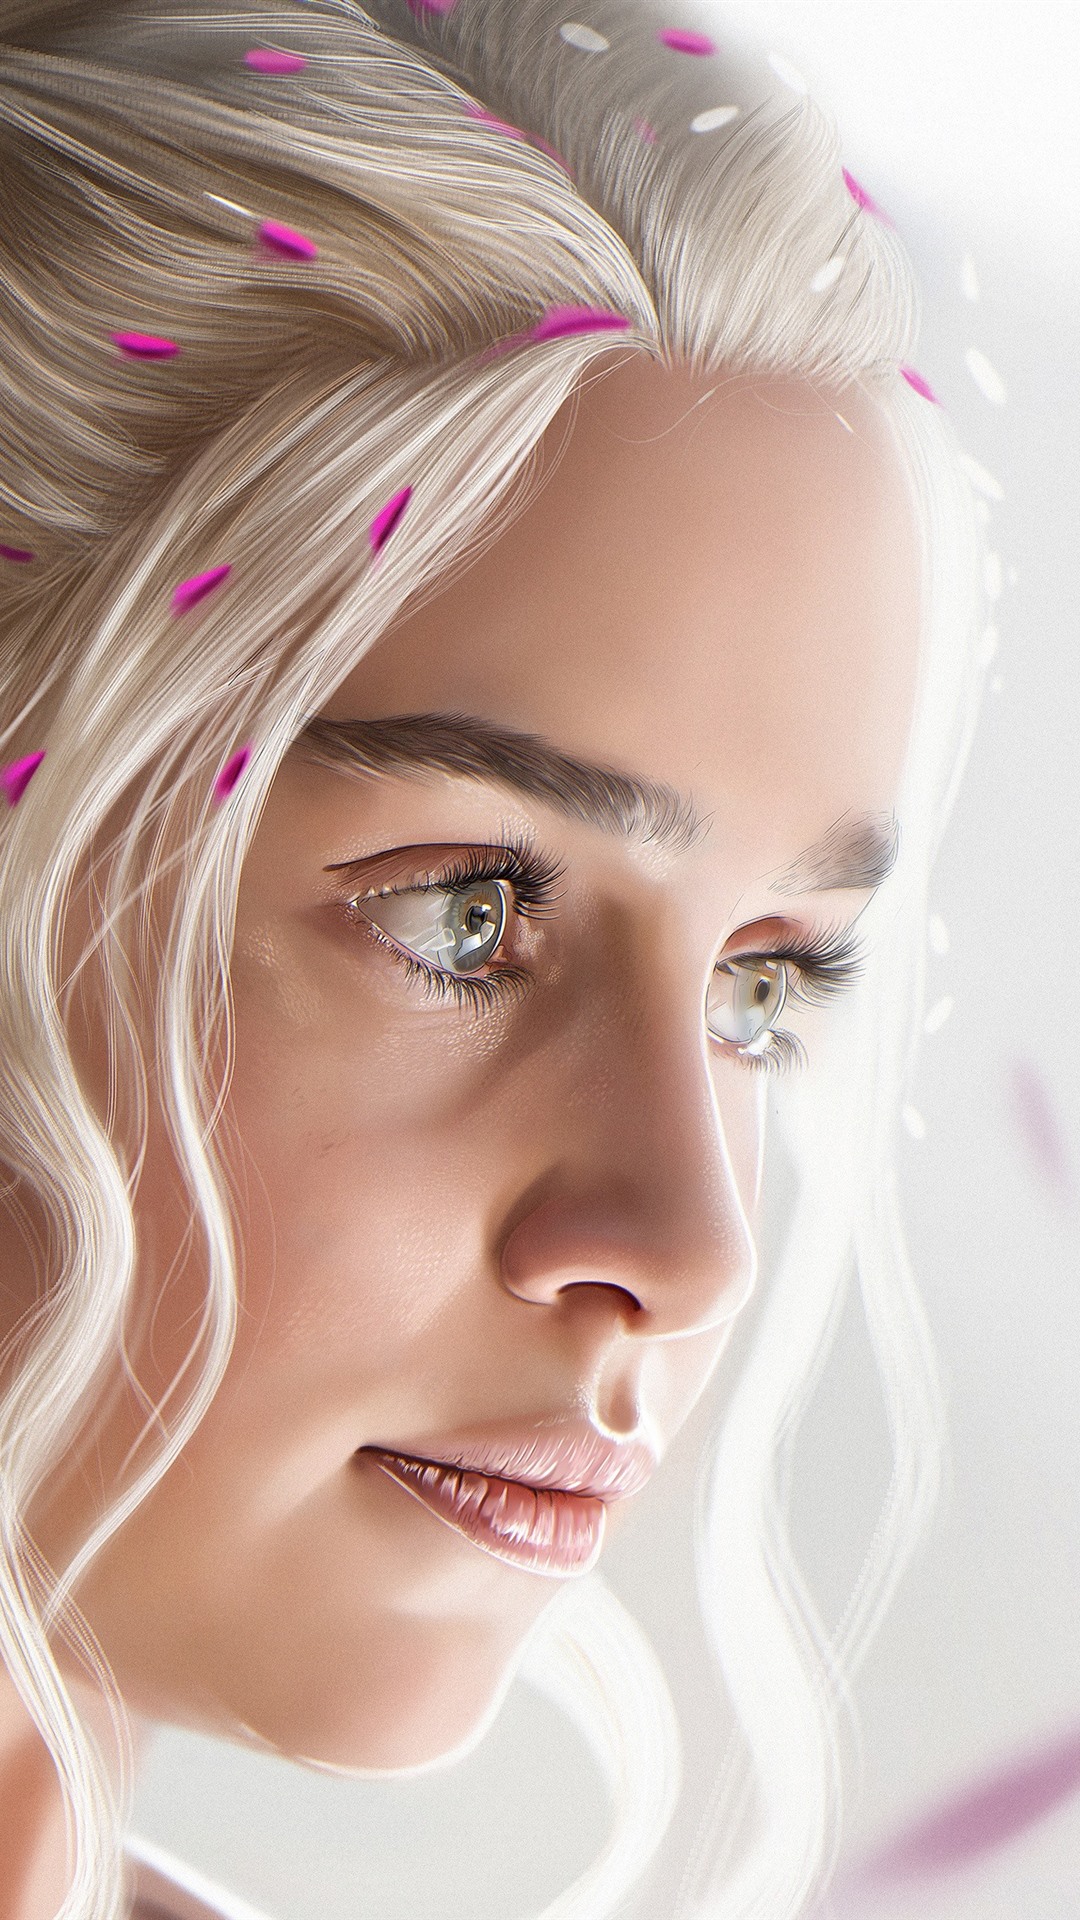 Game Of Thrones Season 7 Emilia Clarke As Daenerys Targaryen Wallpapers